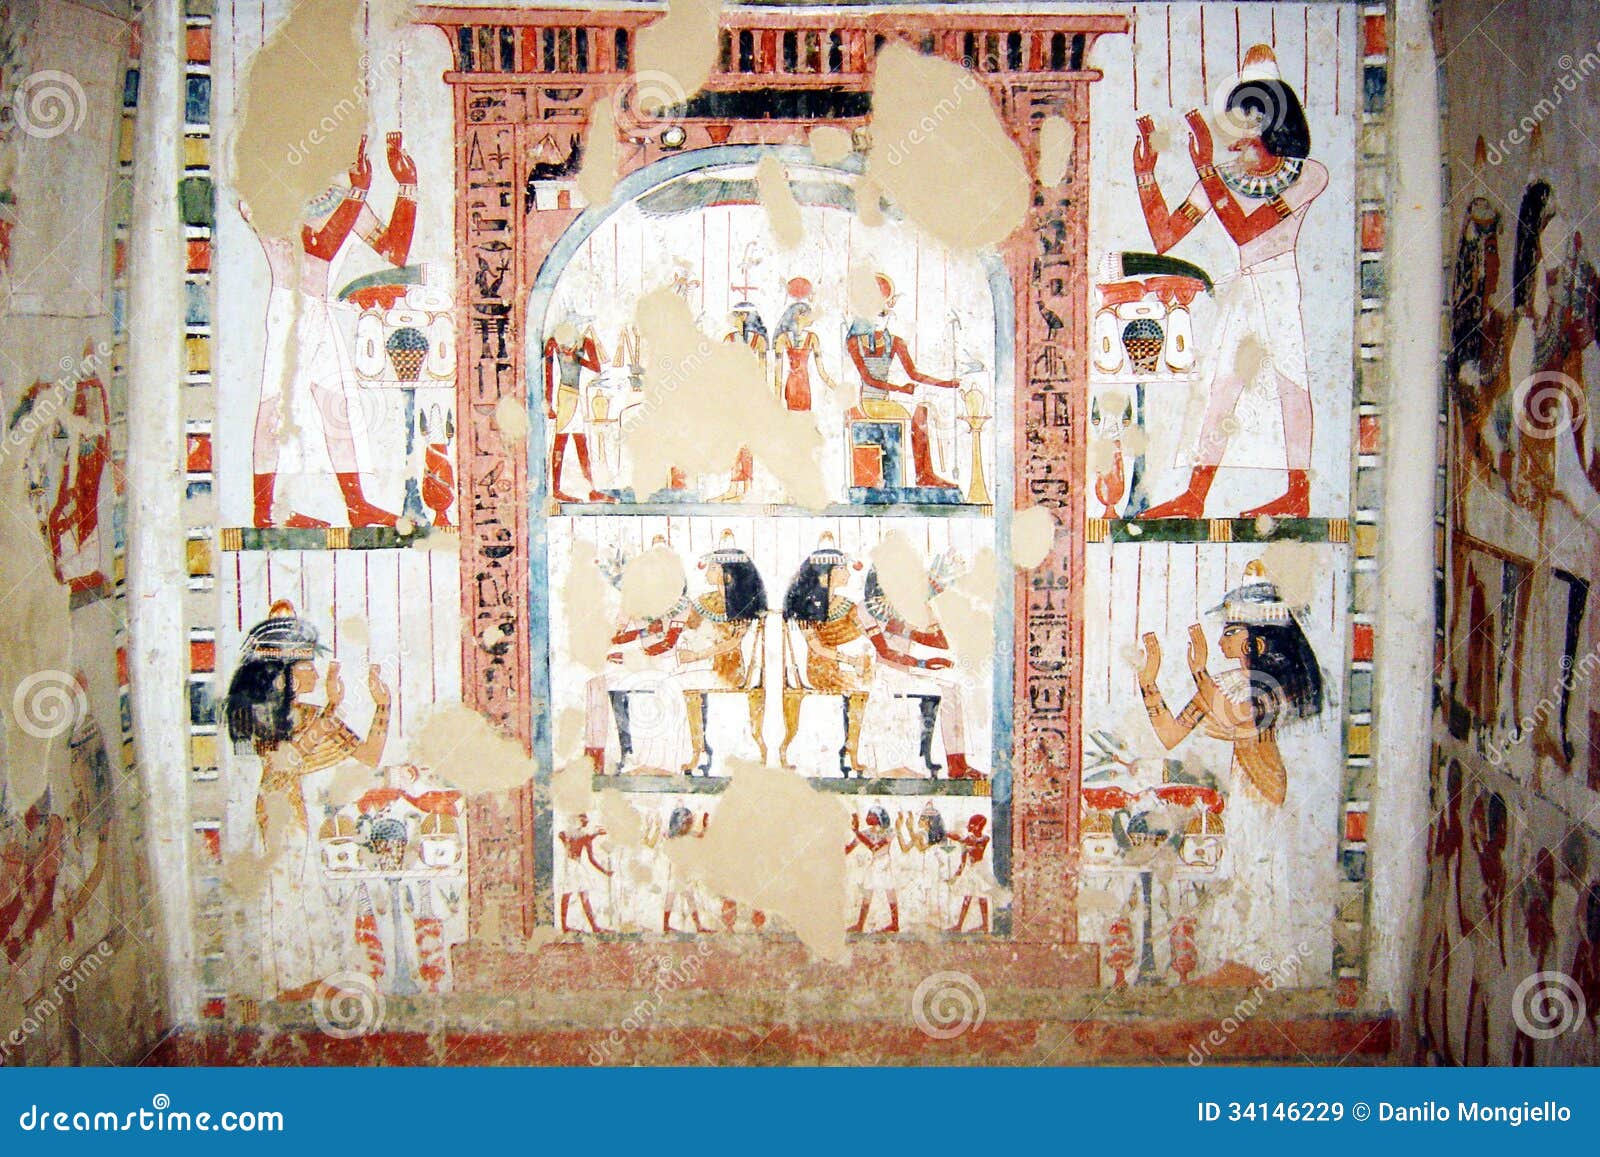 Image result for menna tomb egypt